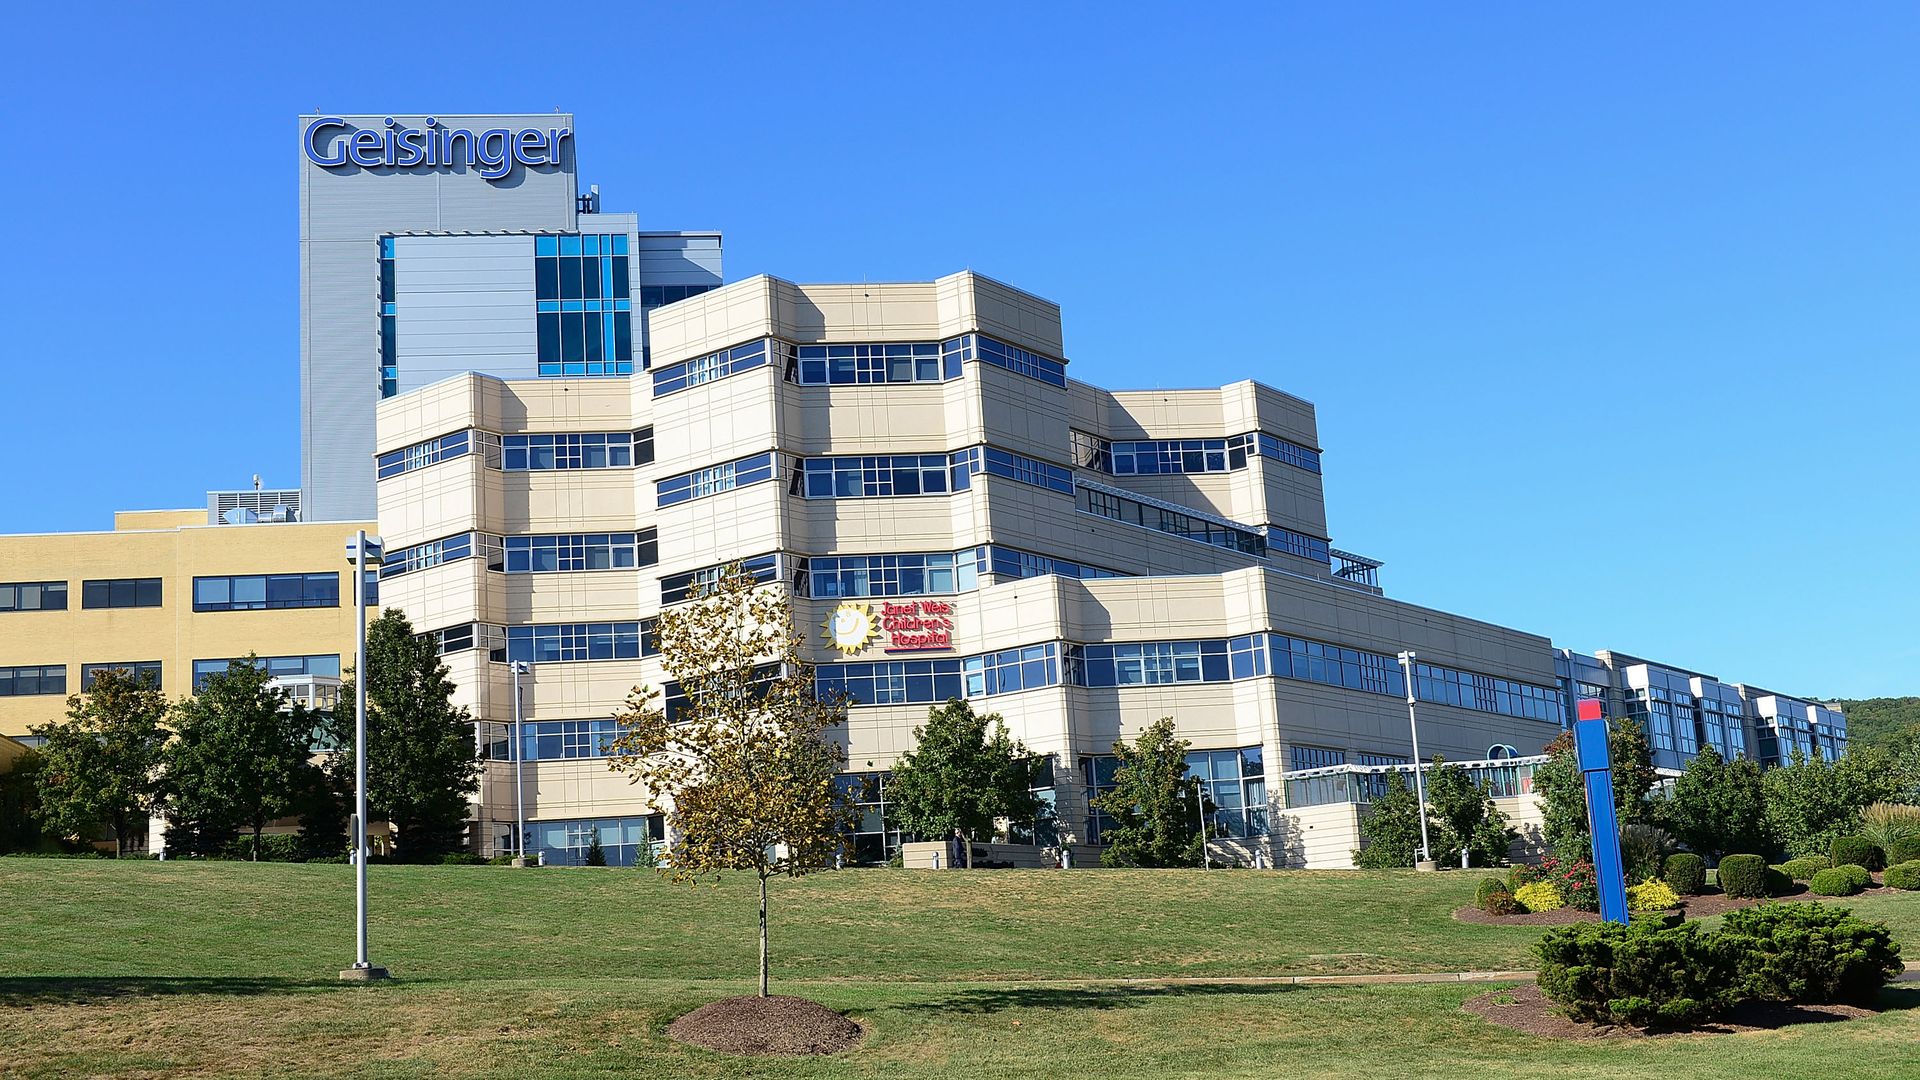 Geisinger Medical Center, a hospital, in Pennsylvania.